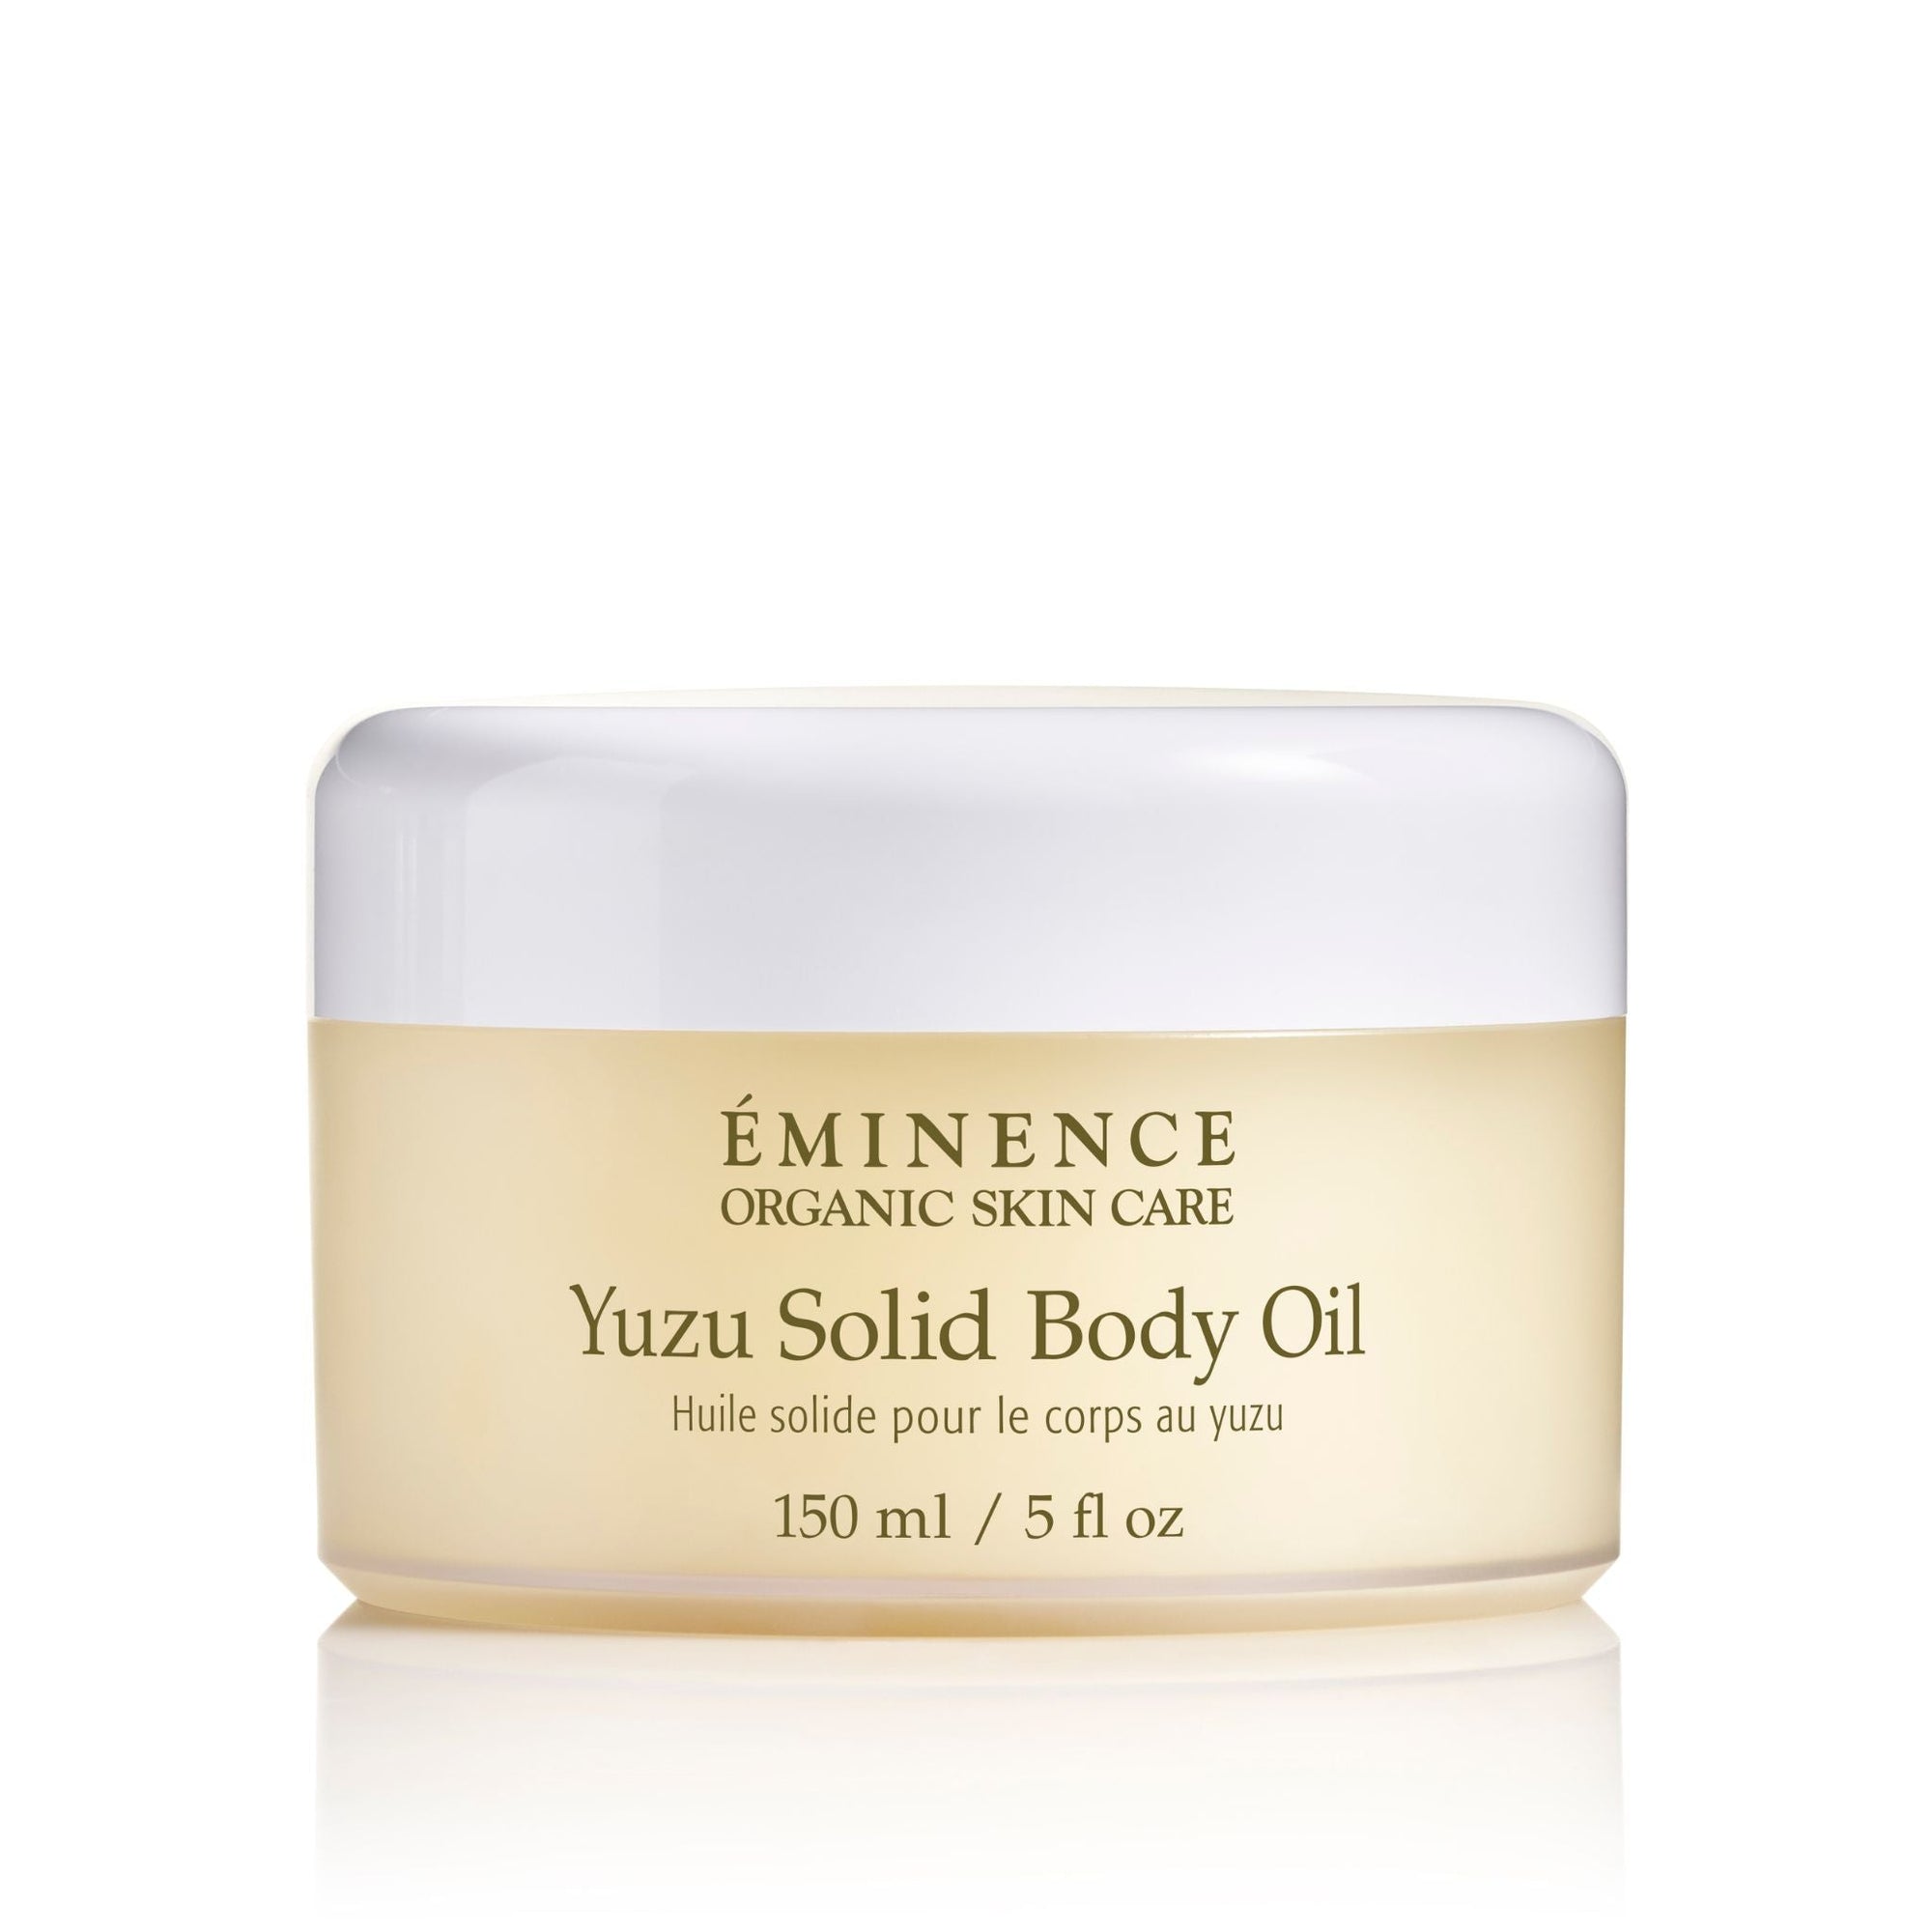 Eminence Organics - Eminence Yuzu Solid Body Oil - ORESTA clean beauty simplified